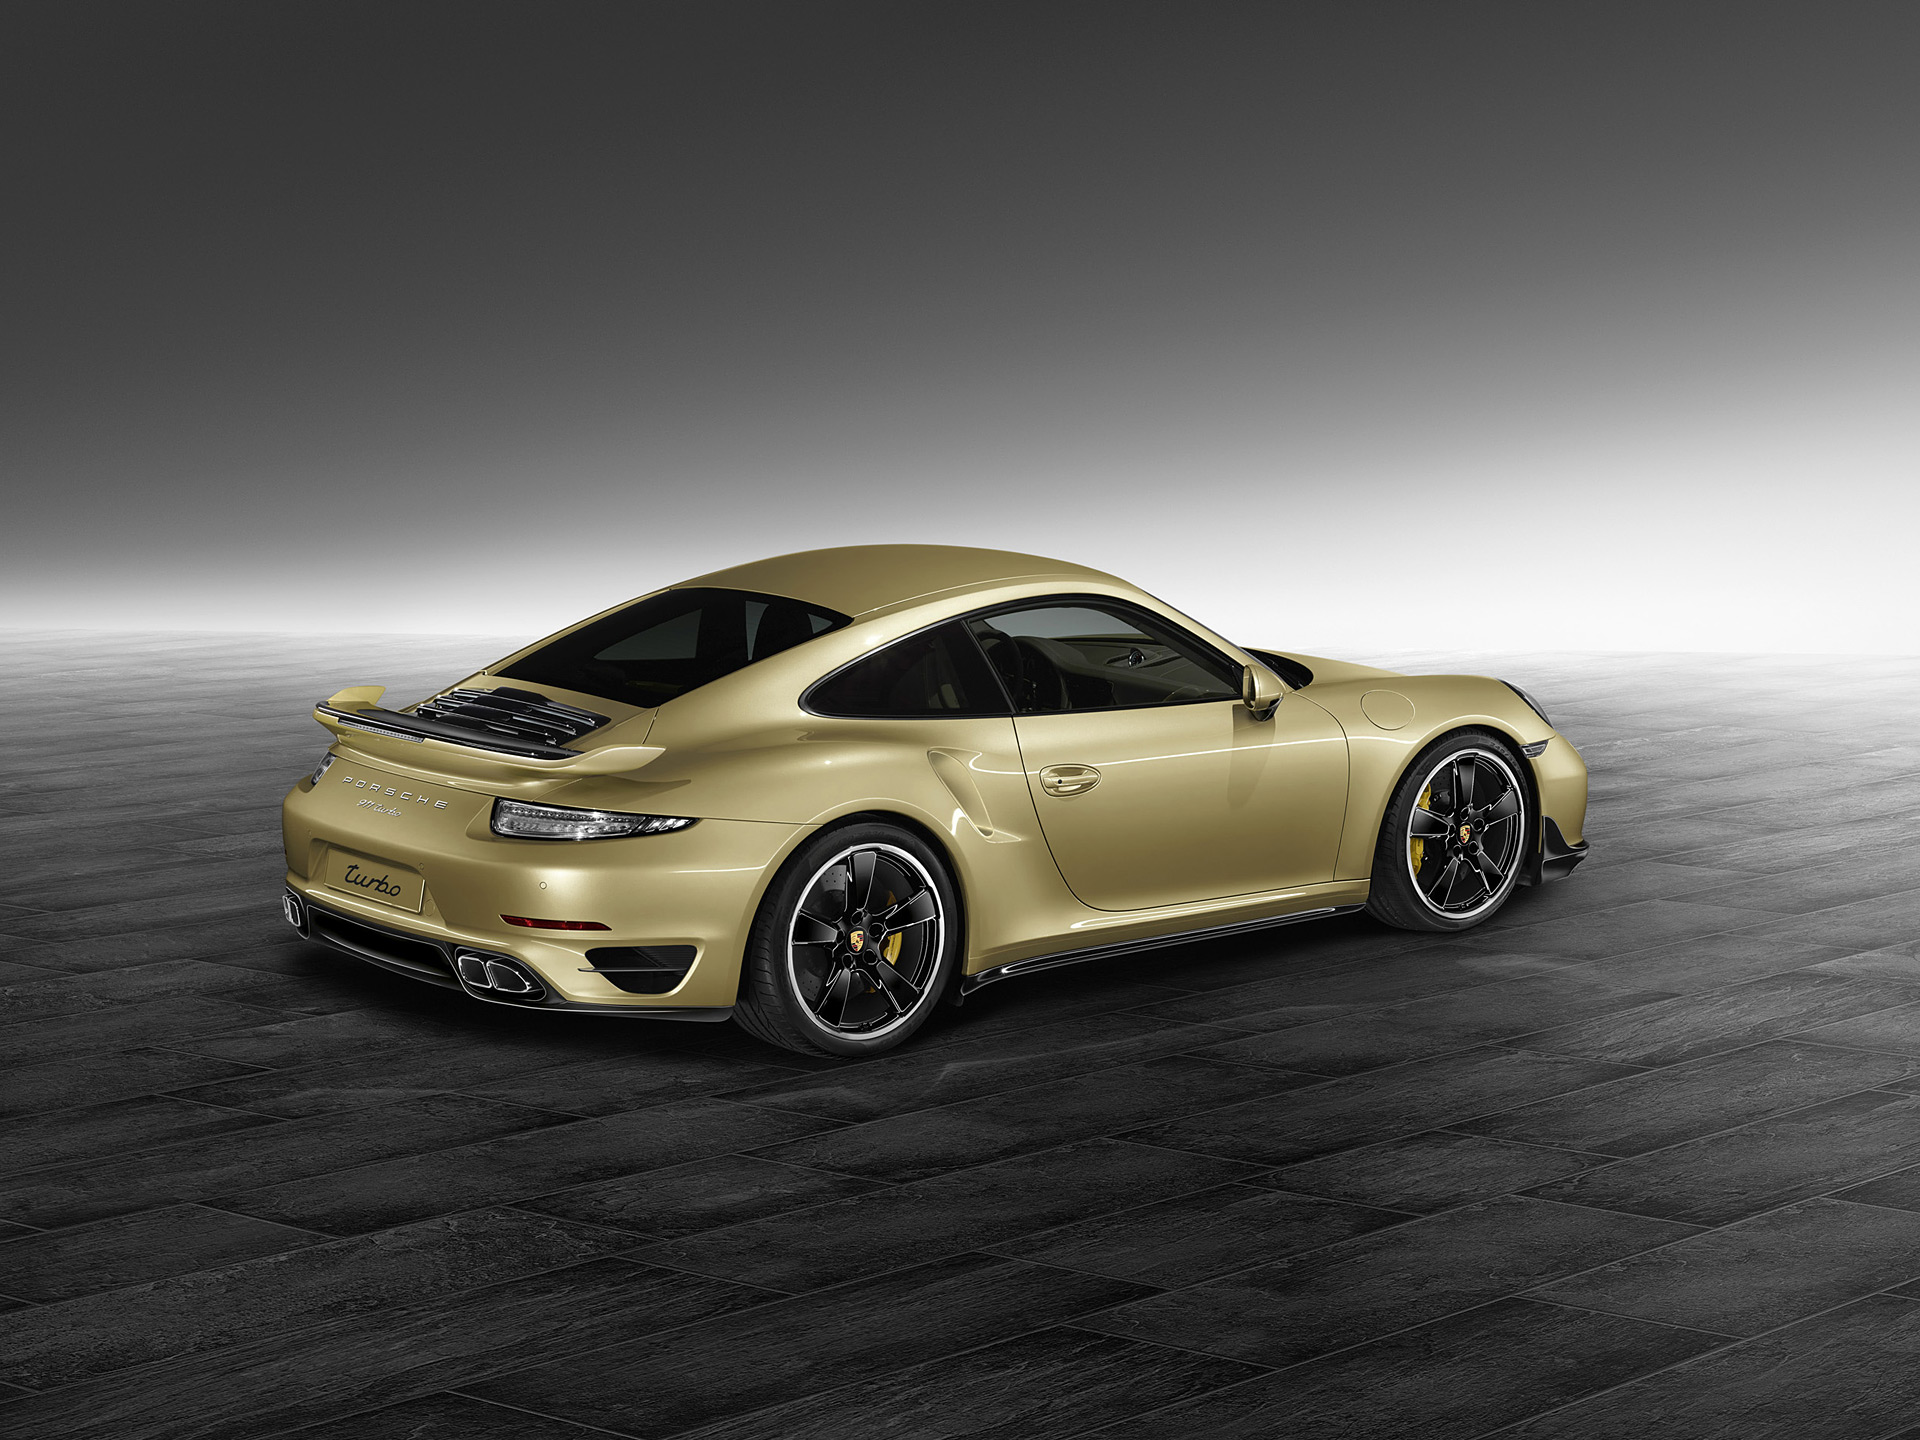  2015 Porsche 911 Turbo Aerokit Wallpaper.